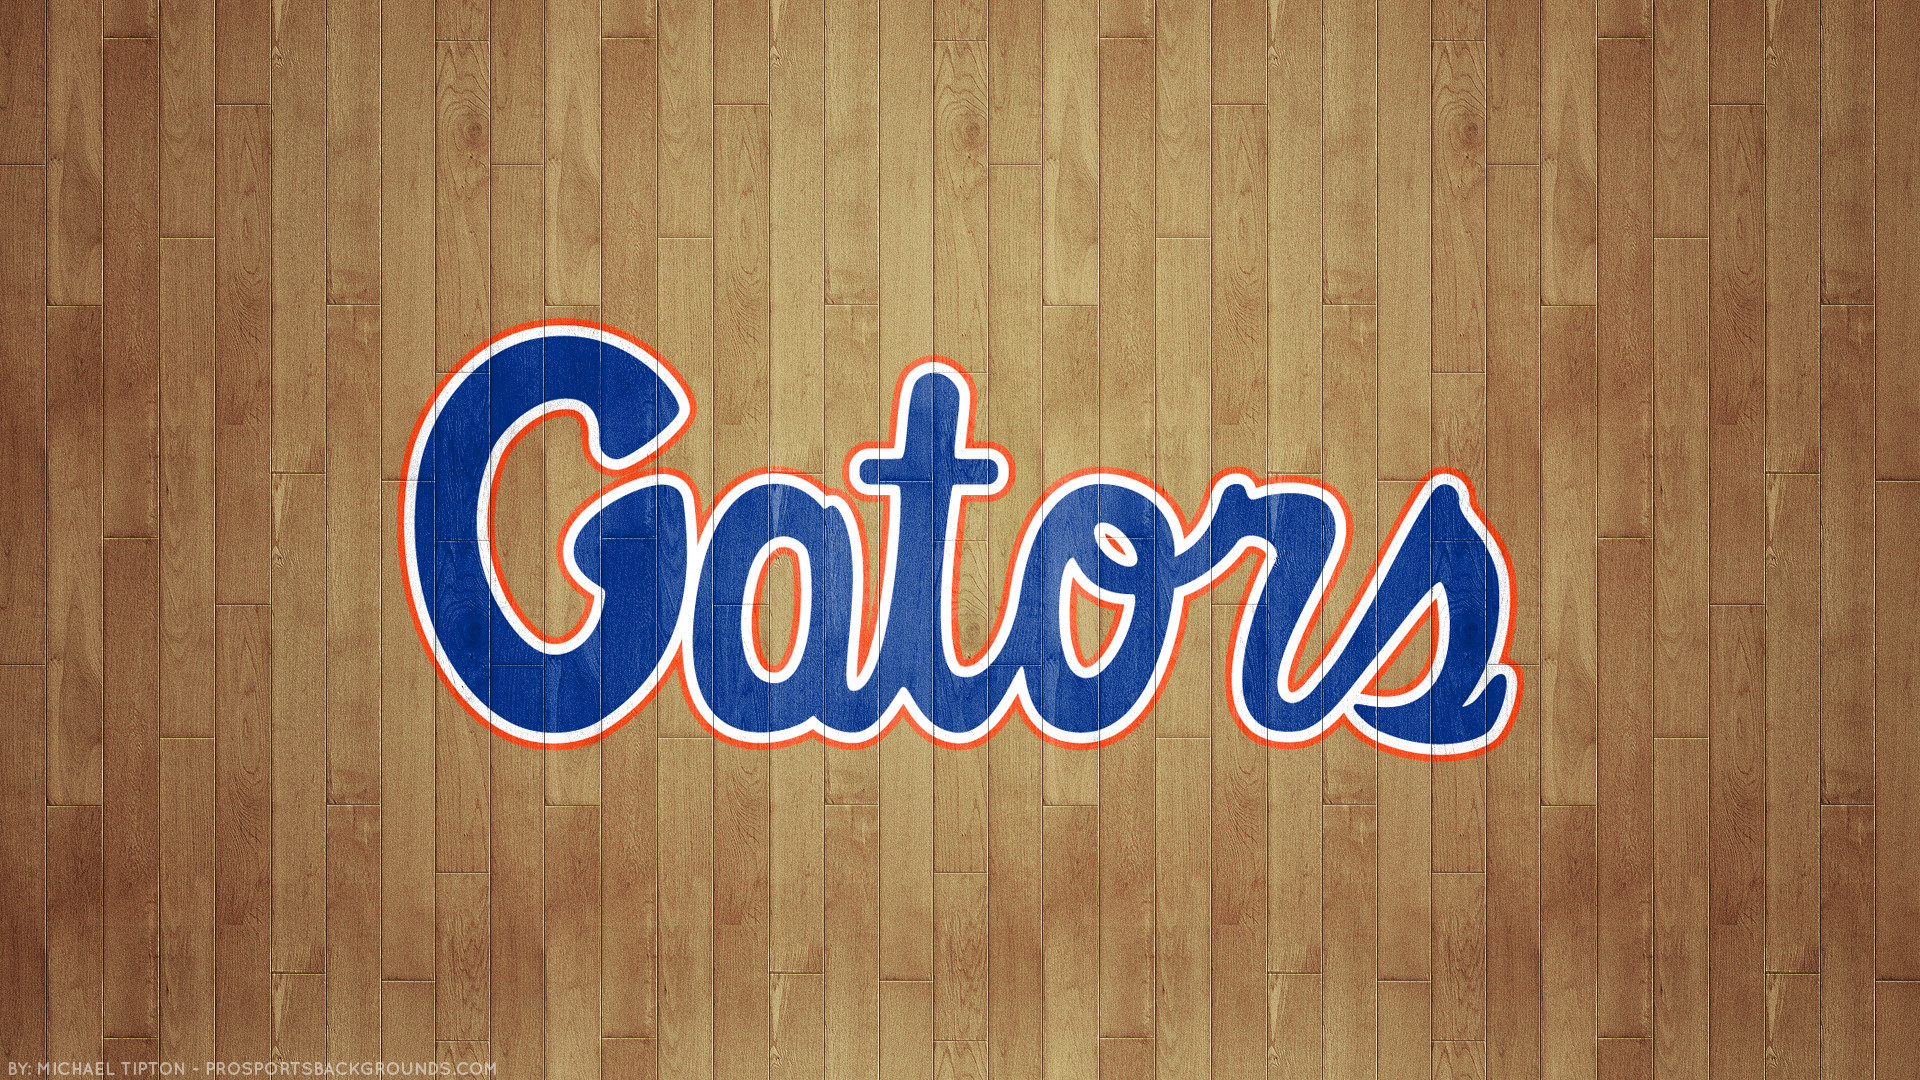 1920x1080 Florida gators ncaa football team logo grass wallpaper free for mac jpg   Florida gators desktop